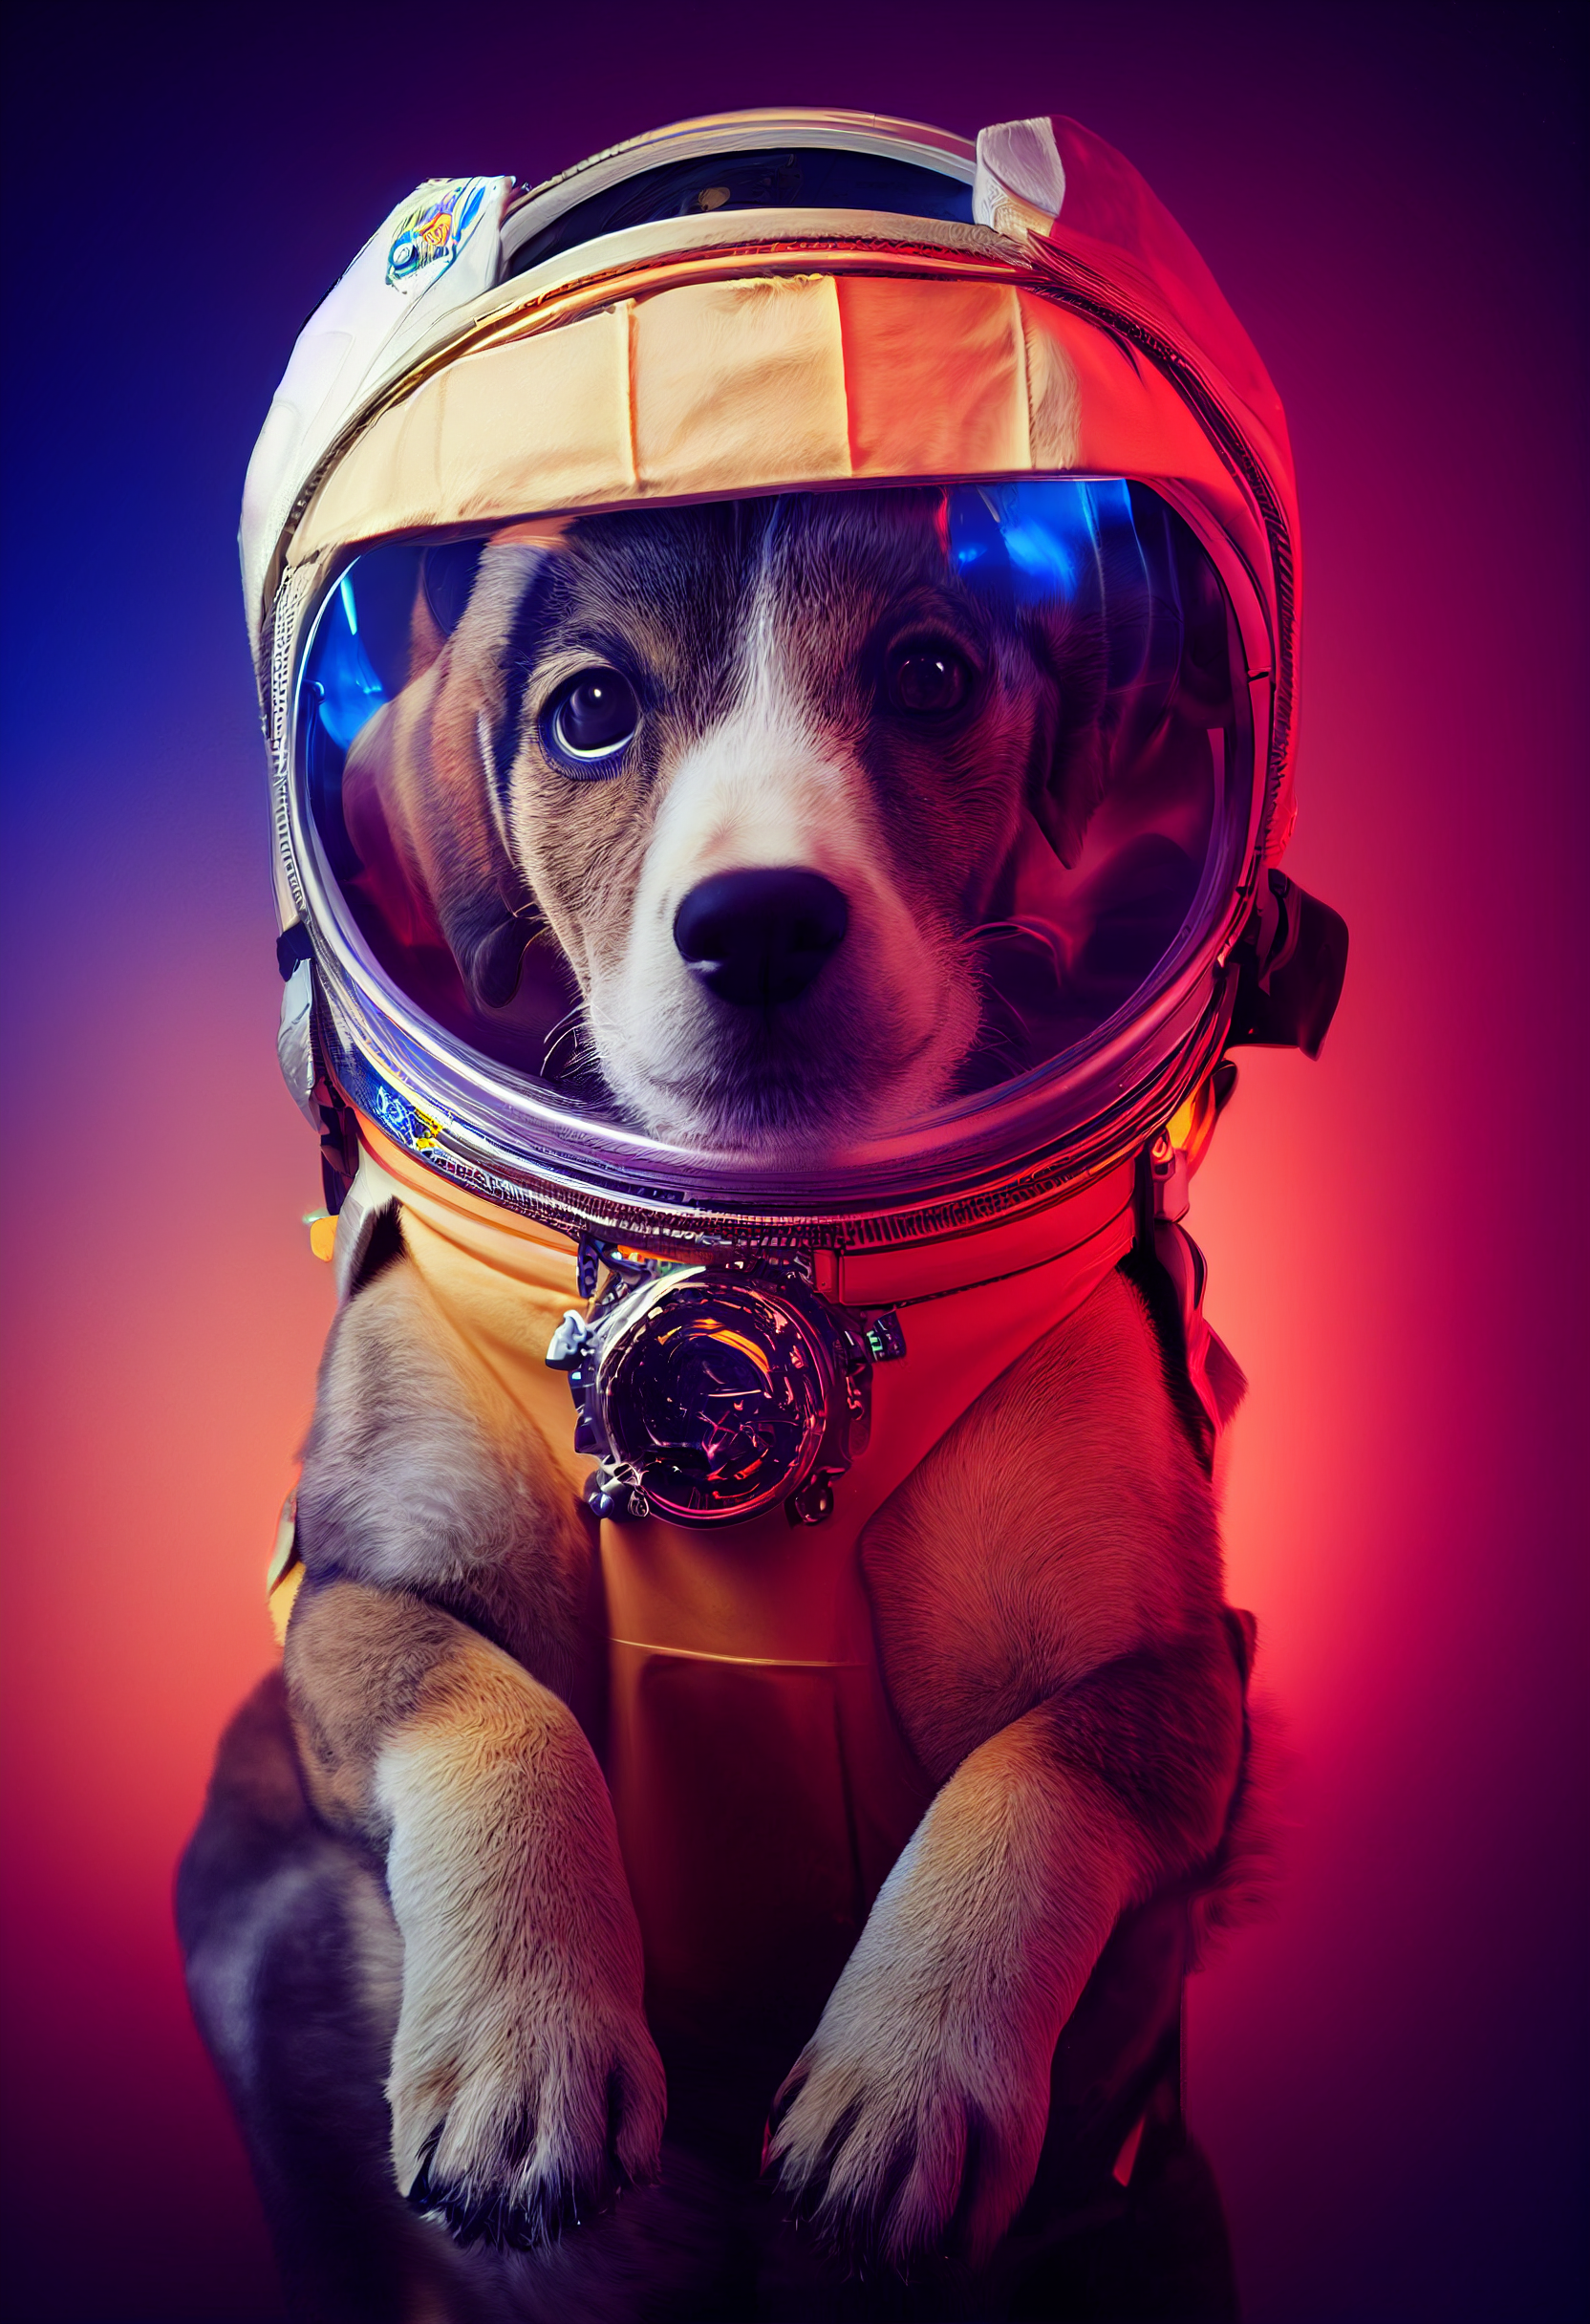 ResistanceNFT_puppy_astronaut_photo_realistic_futuristic_by_Dav_c3264ff2-8b1a-477e-a1ce-6babcab39c55.png